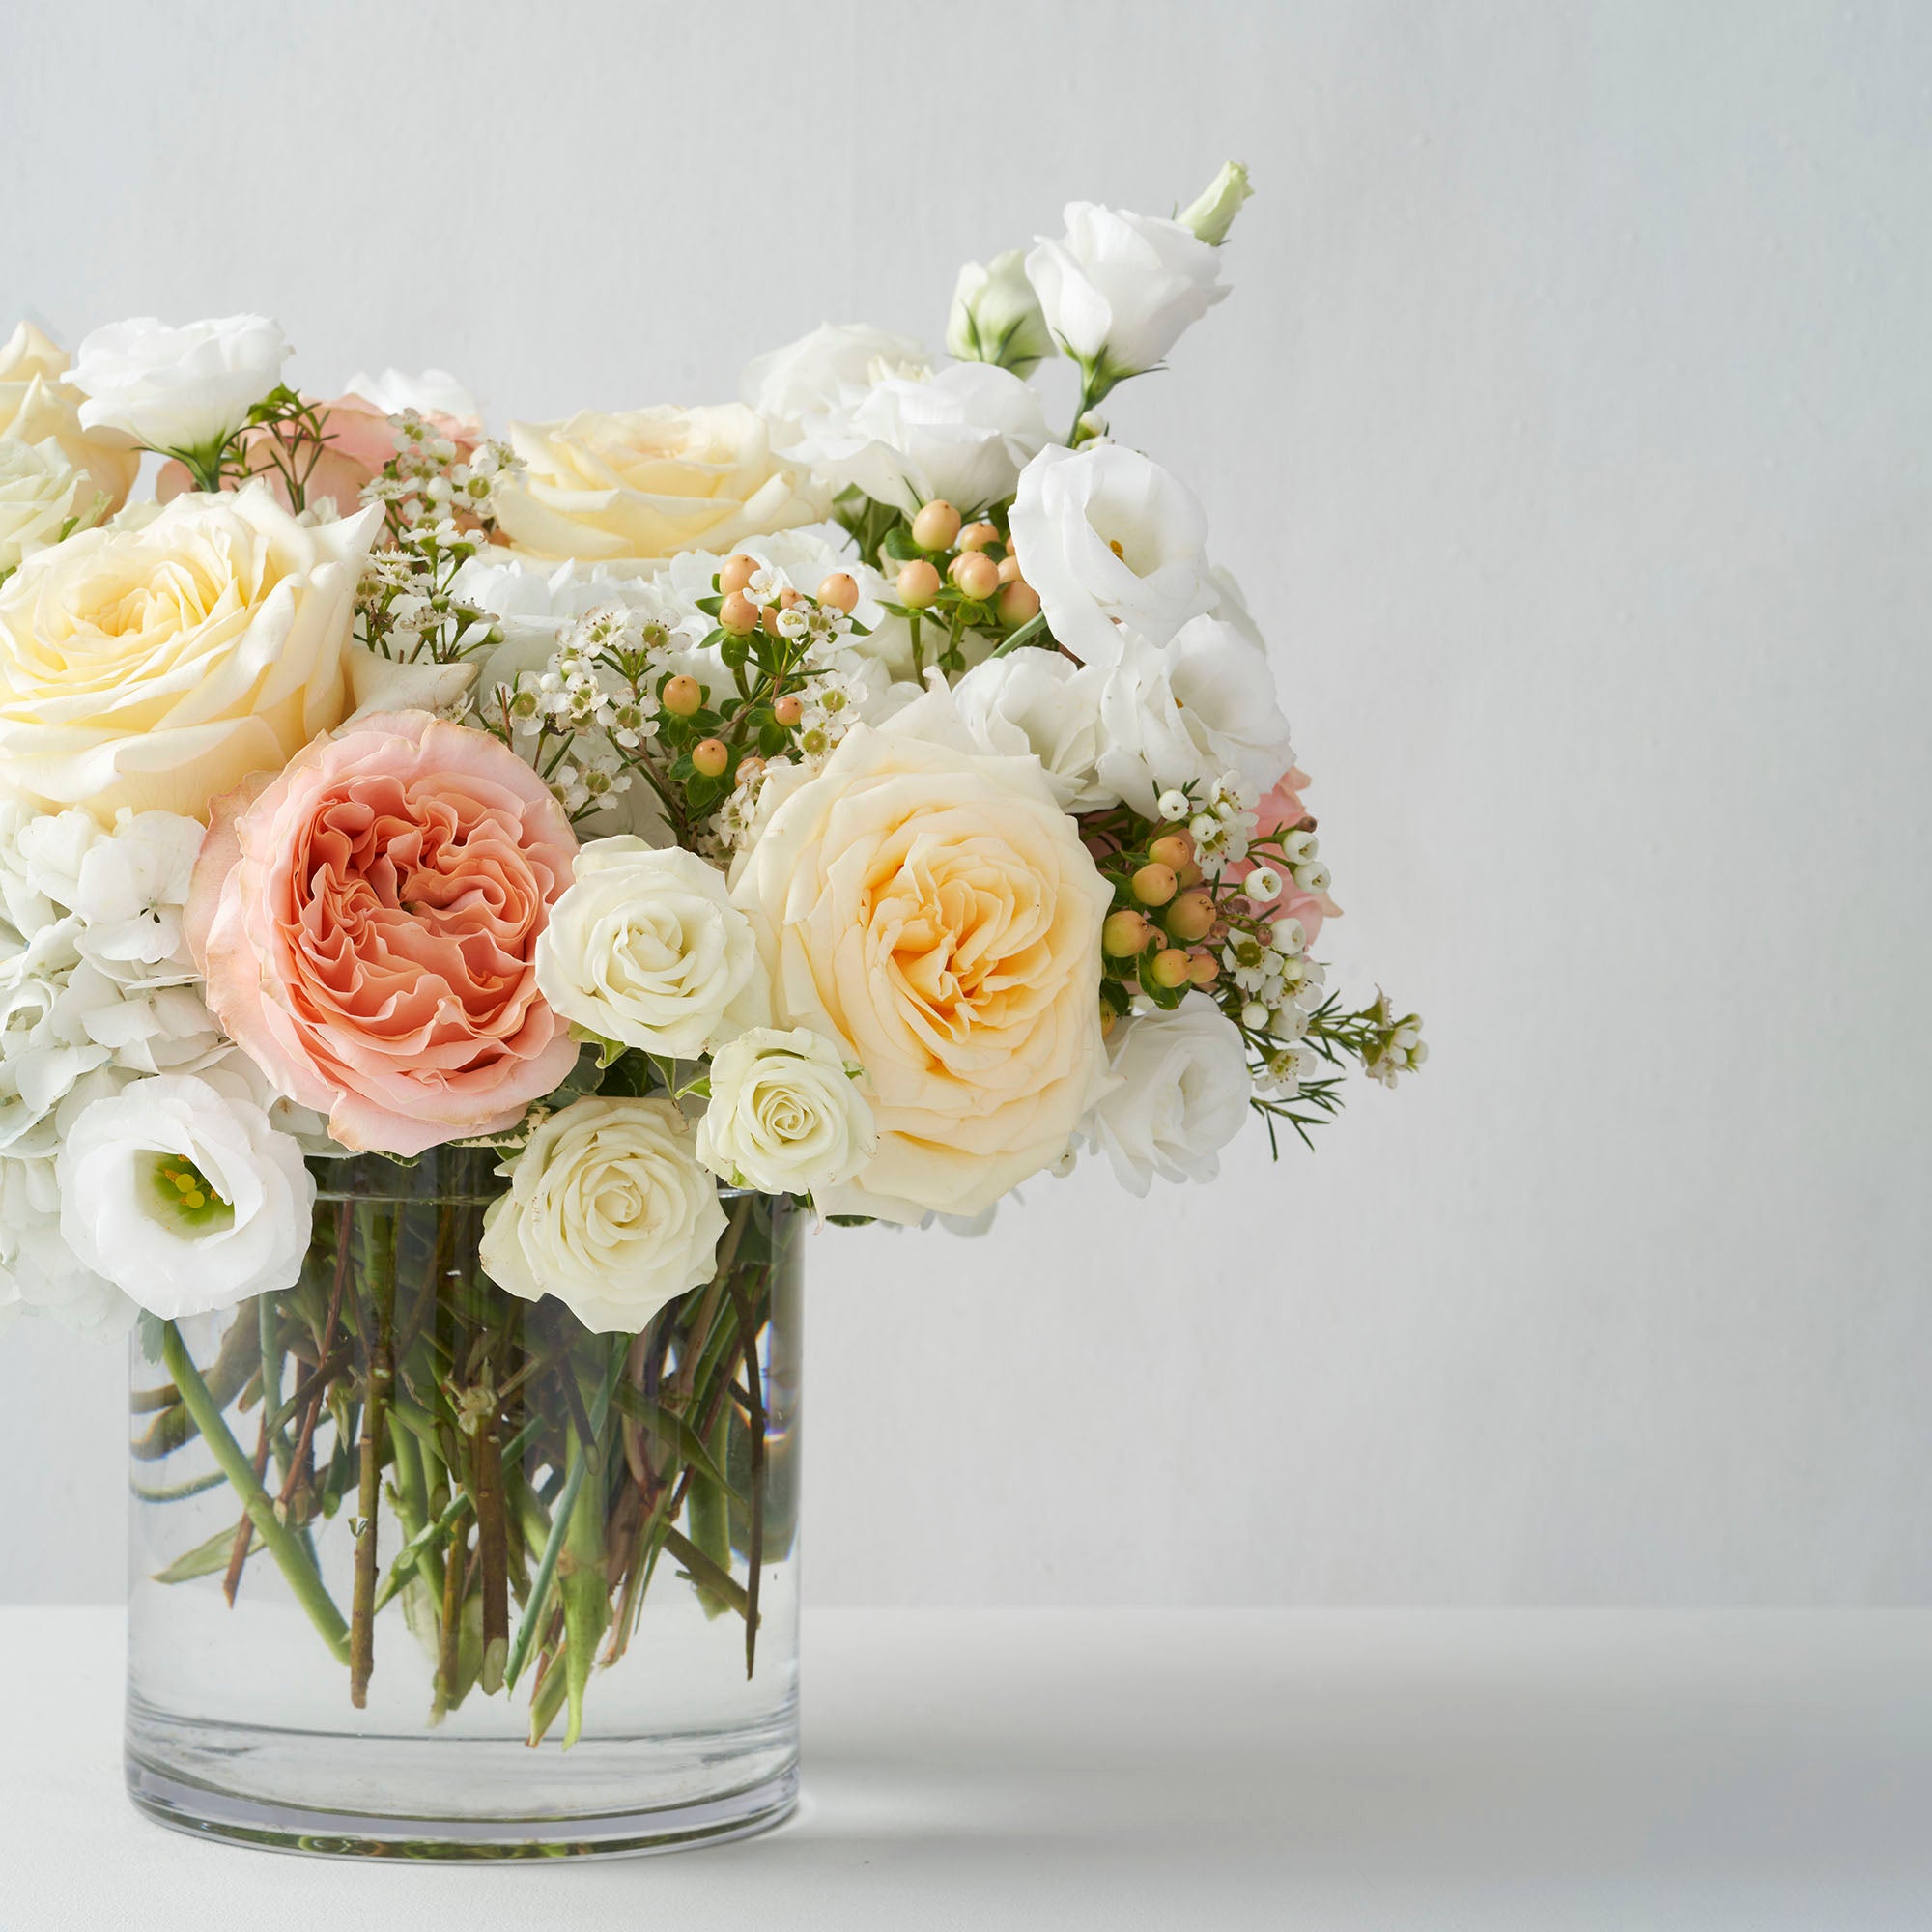 Peach roses, cream roses, white lisianthus, and white hydrangea arranged in glass vase on white background.